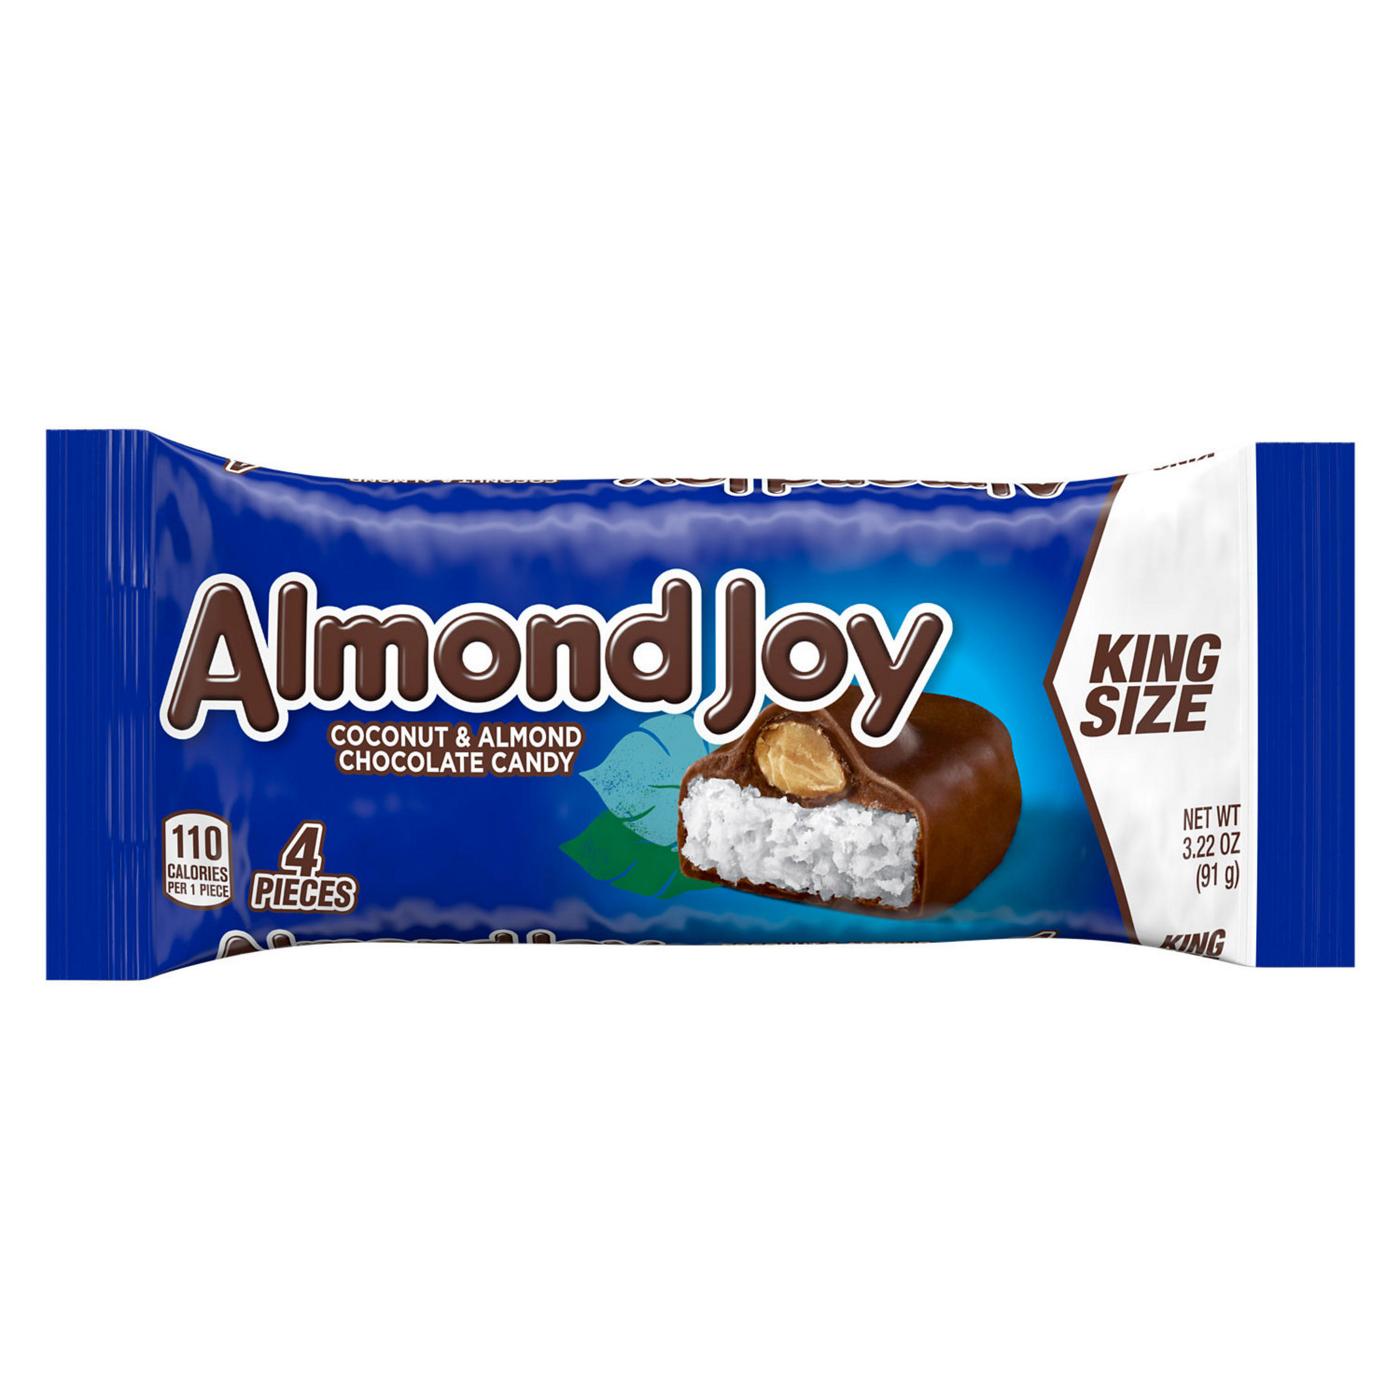 Almond Joy Coconut & Almond Candy Bar - King Size; image 1 of 2